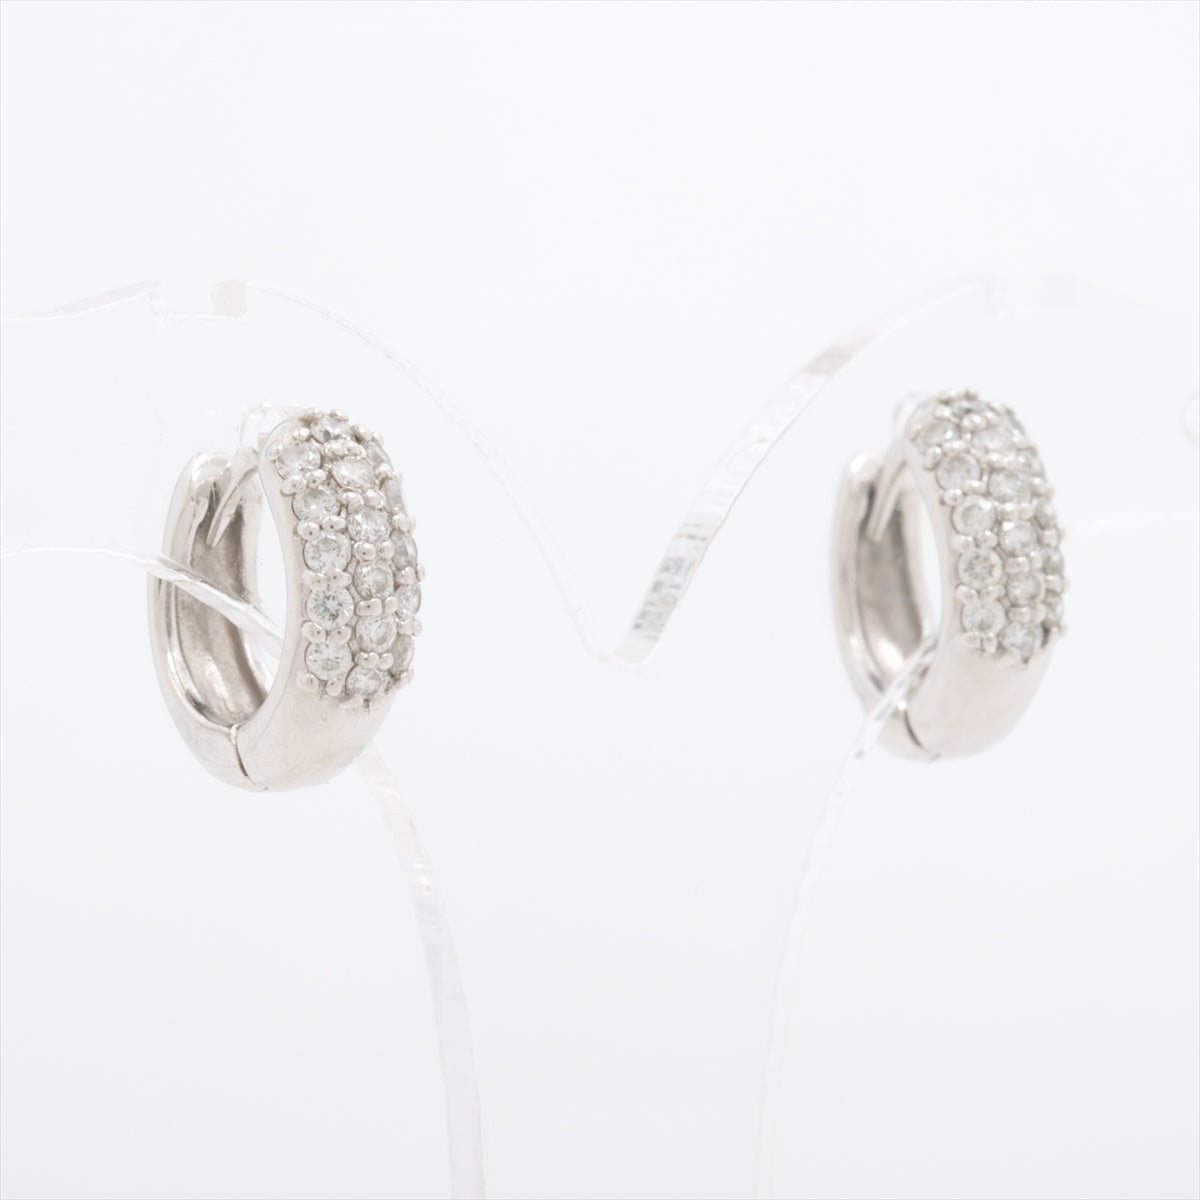 Ponte Vecchio diamond Piercing jewelry K18WG 3.2g 0.15 0.15